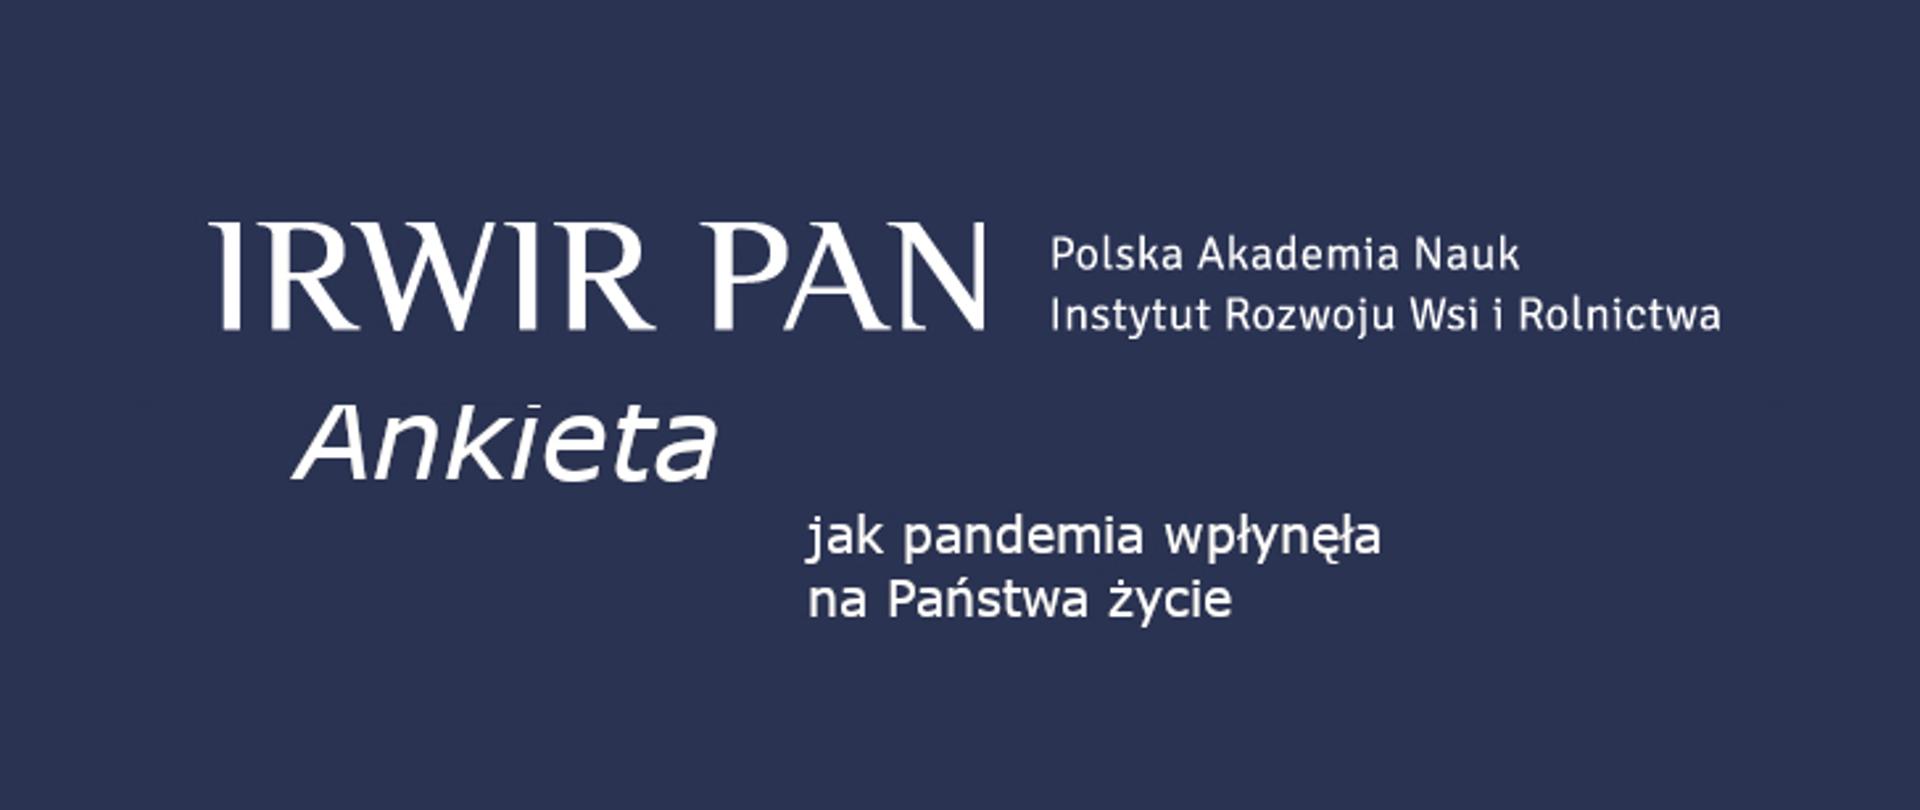 Ankieta IRWIR PAN